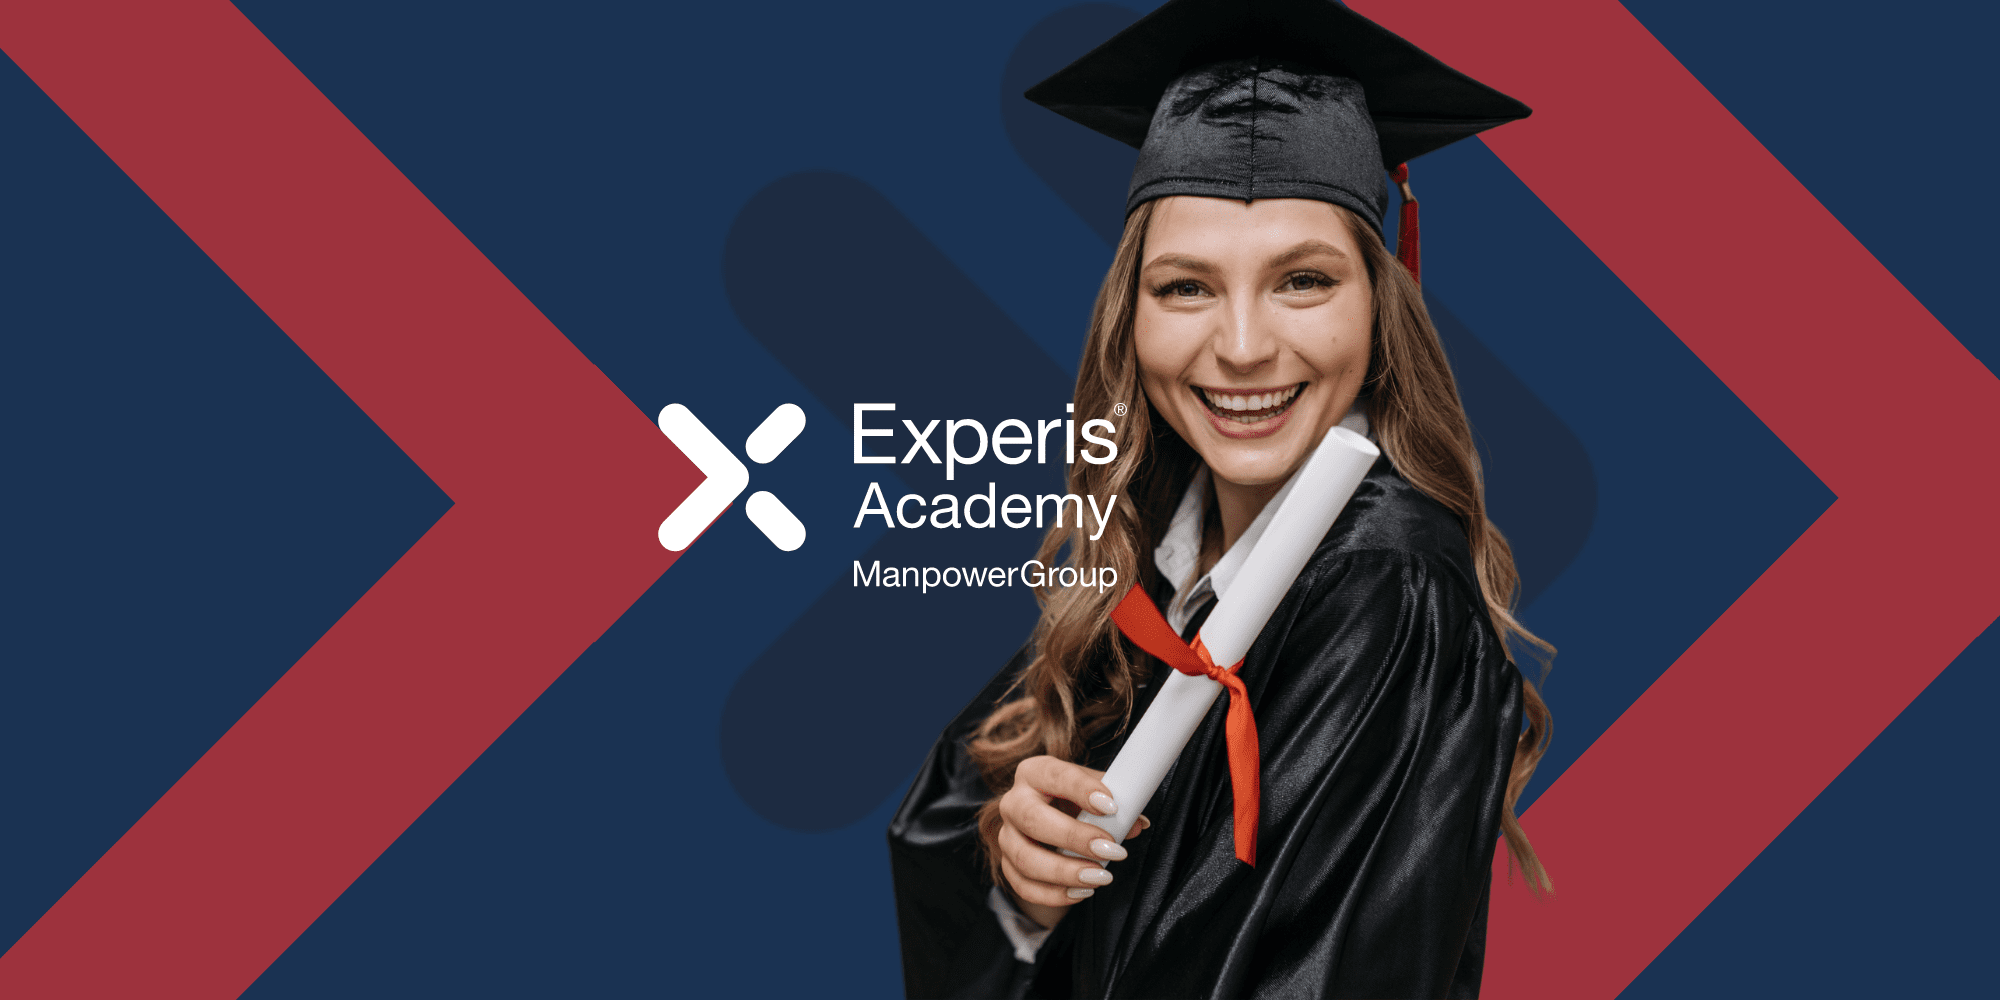 Experis Academy - Free IT Training Program in Switzerland